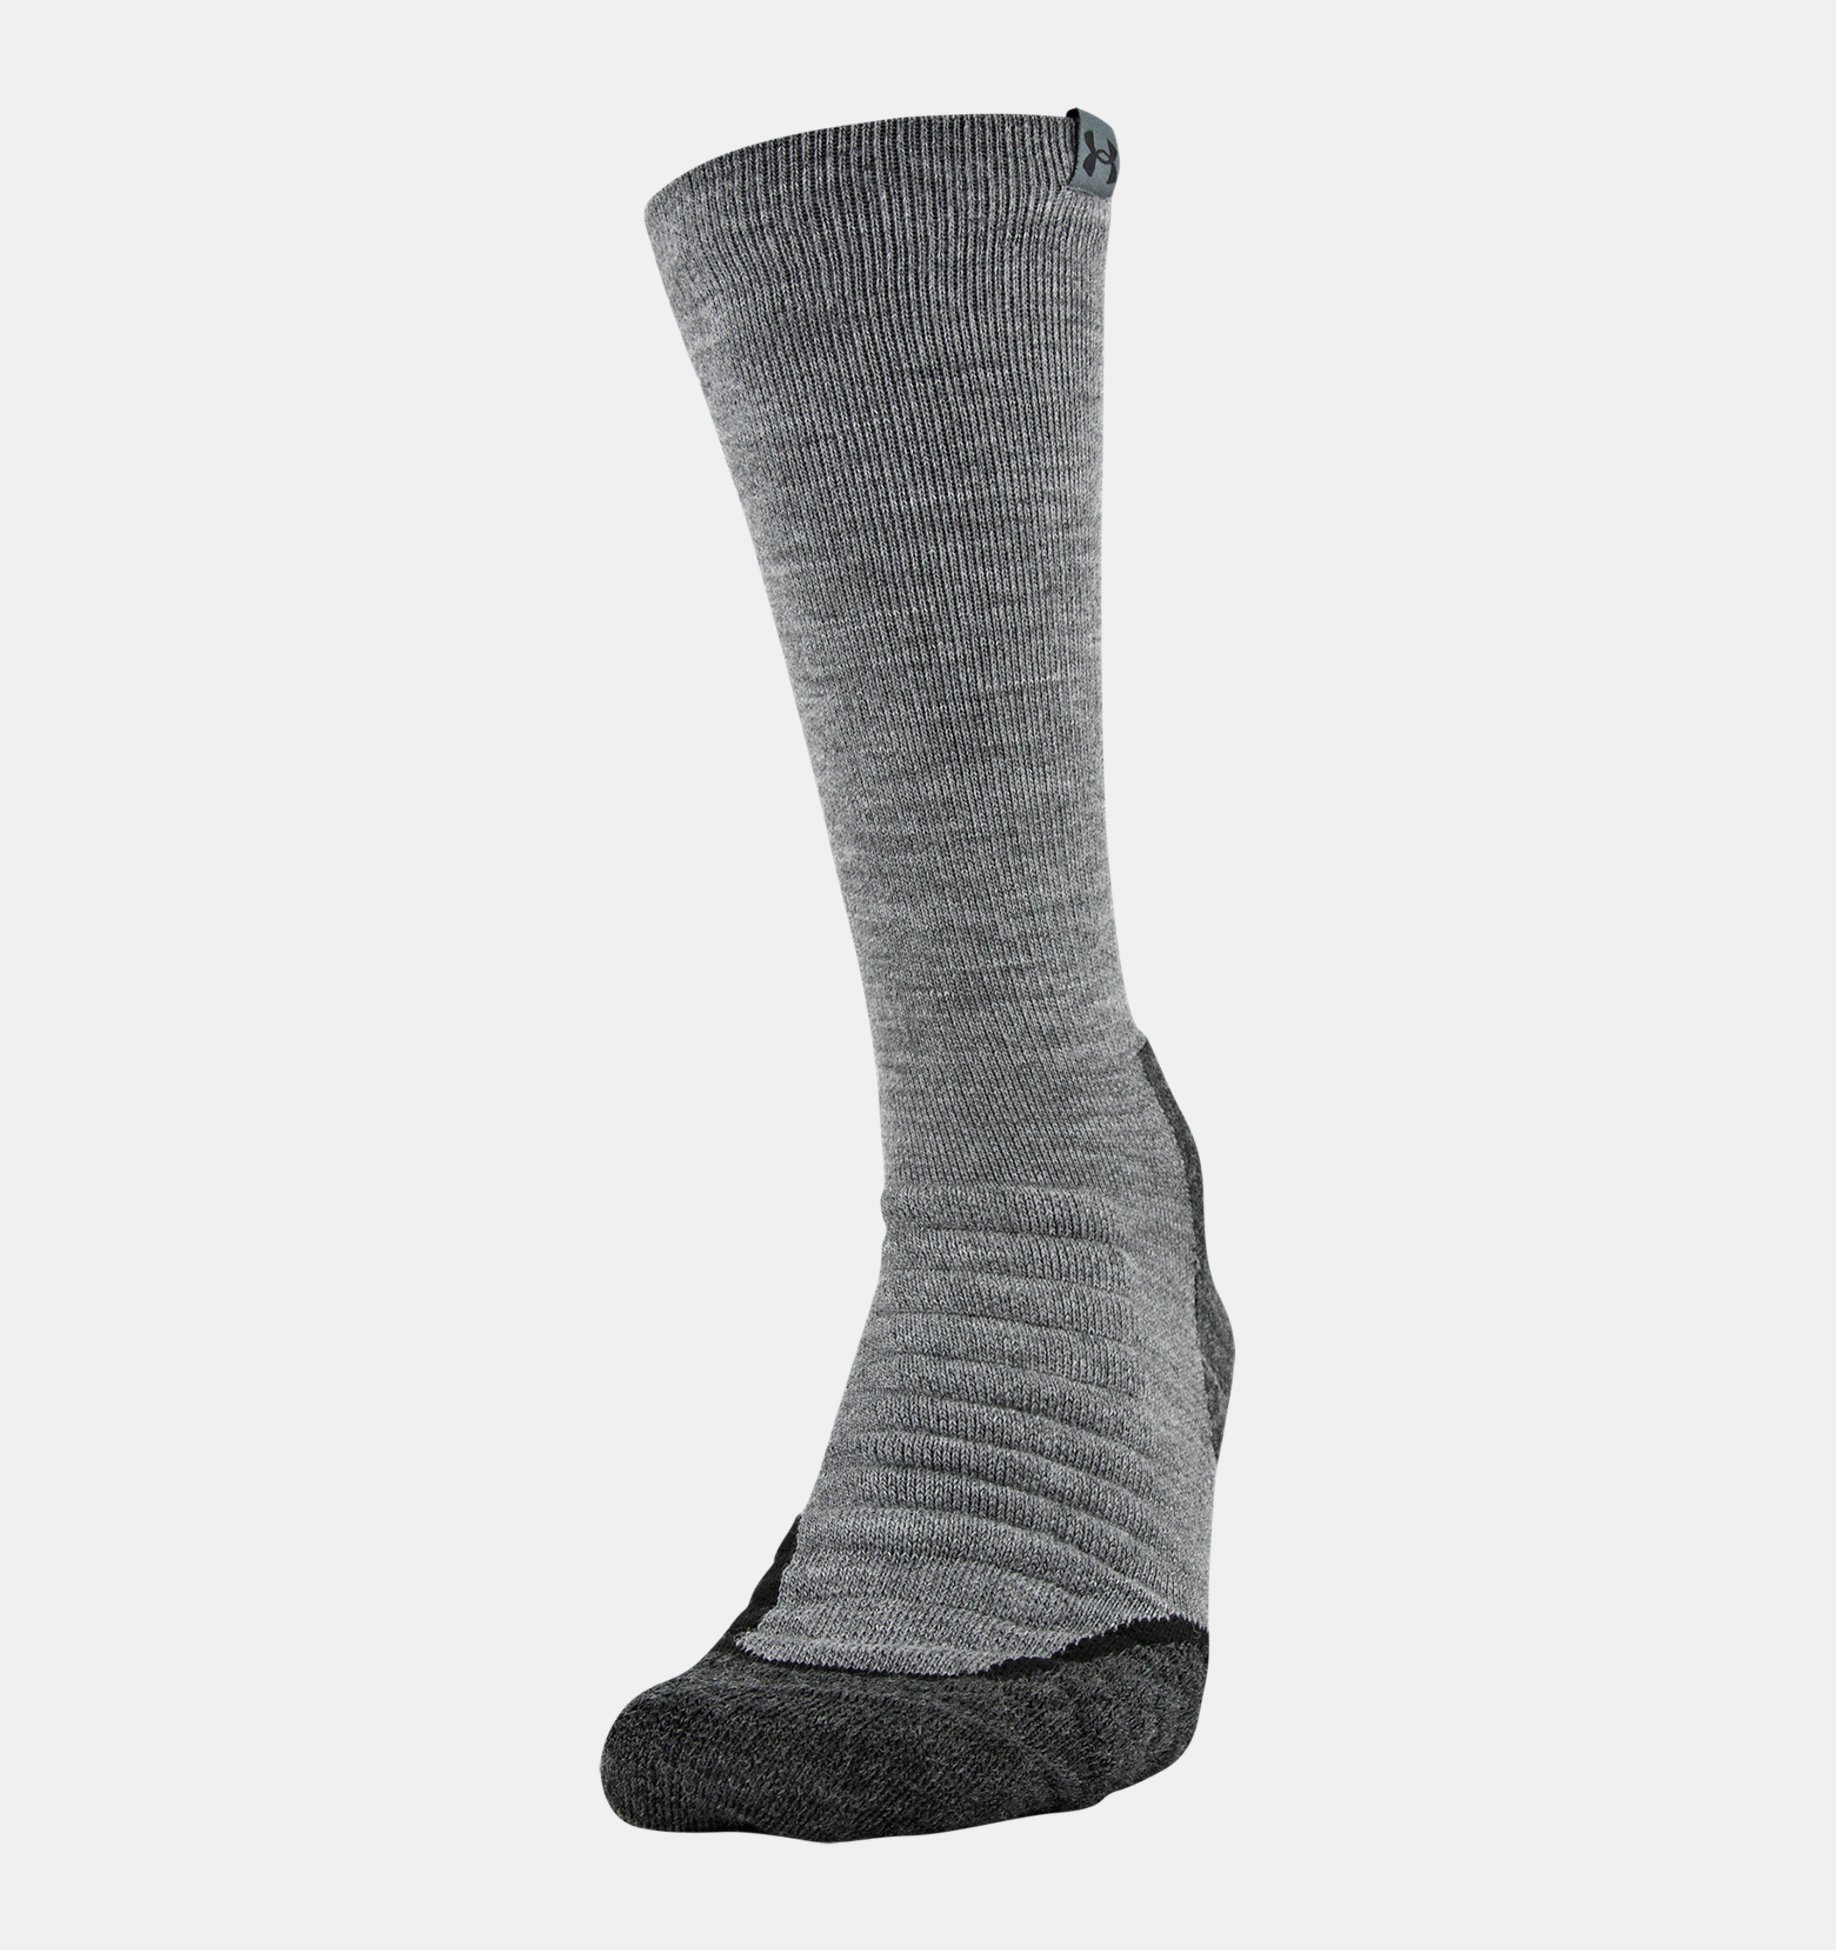 Heavyweight Modal boot socks 2 sizes 